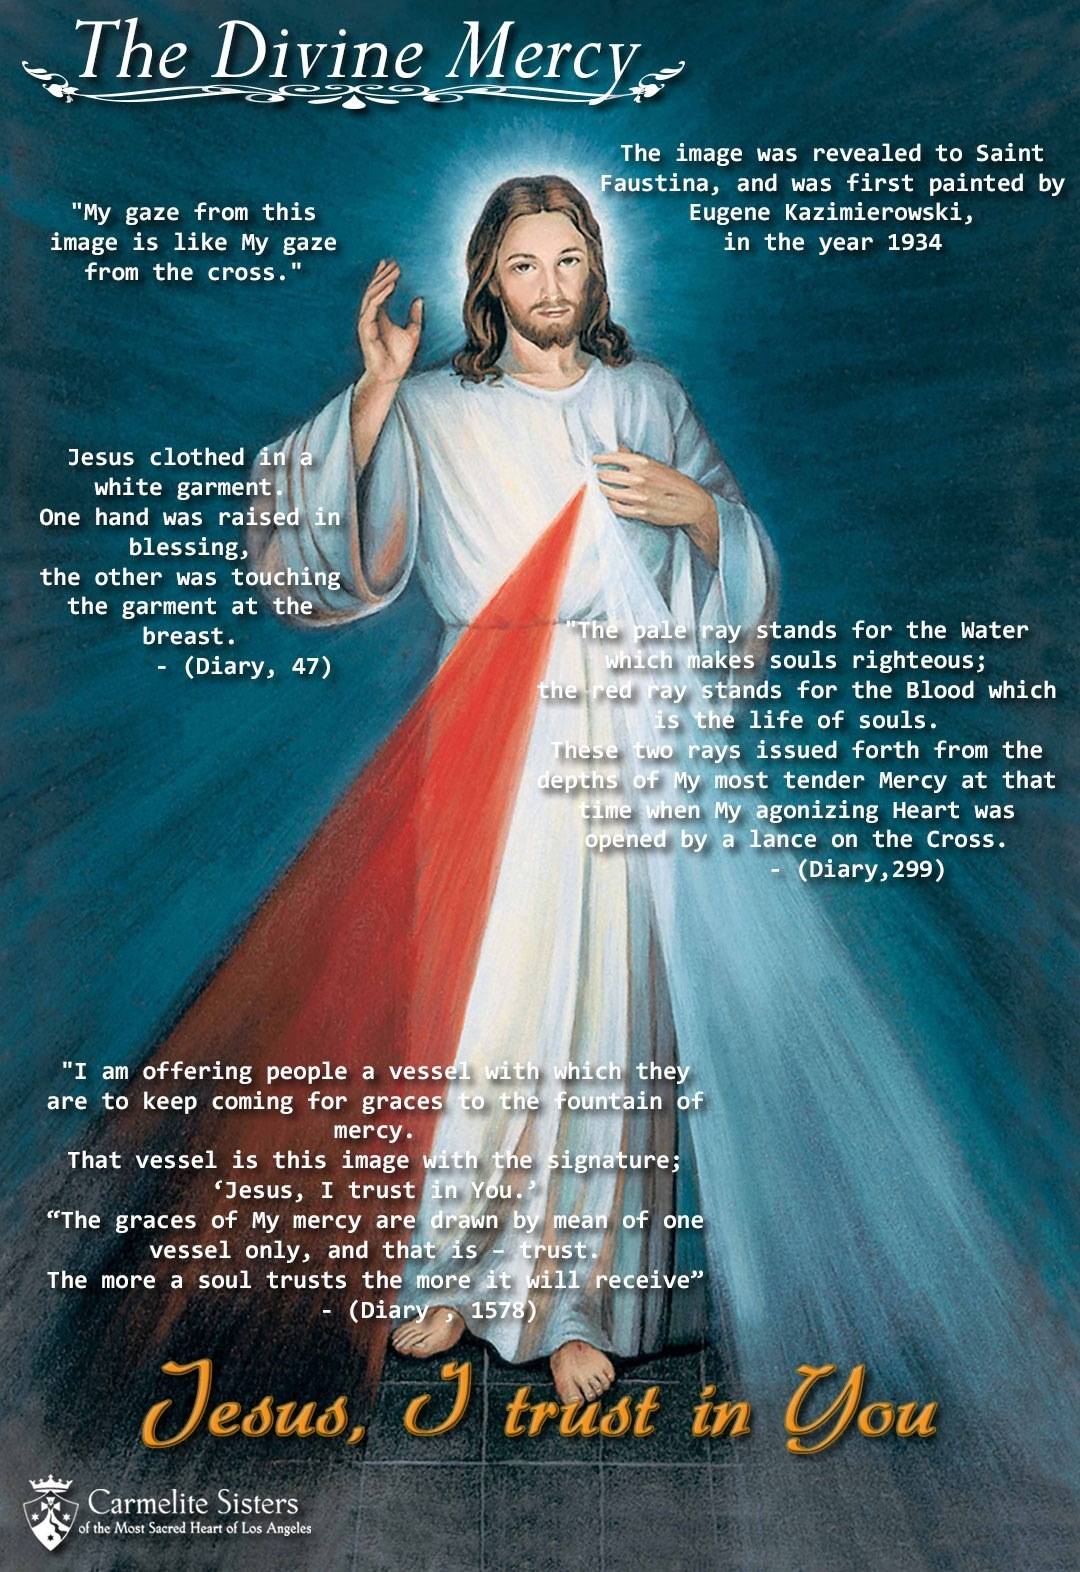 The Divine Mercy image of Jesus, 'Jesus I trust in You'